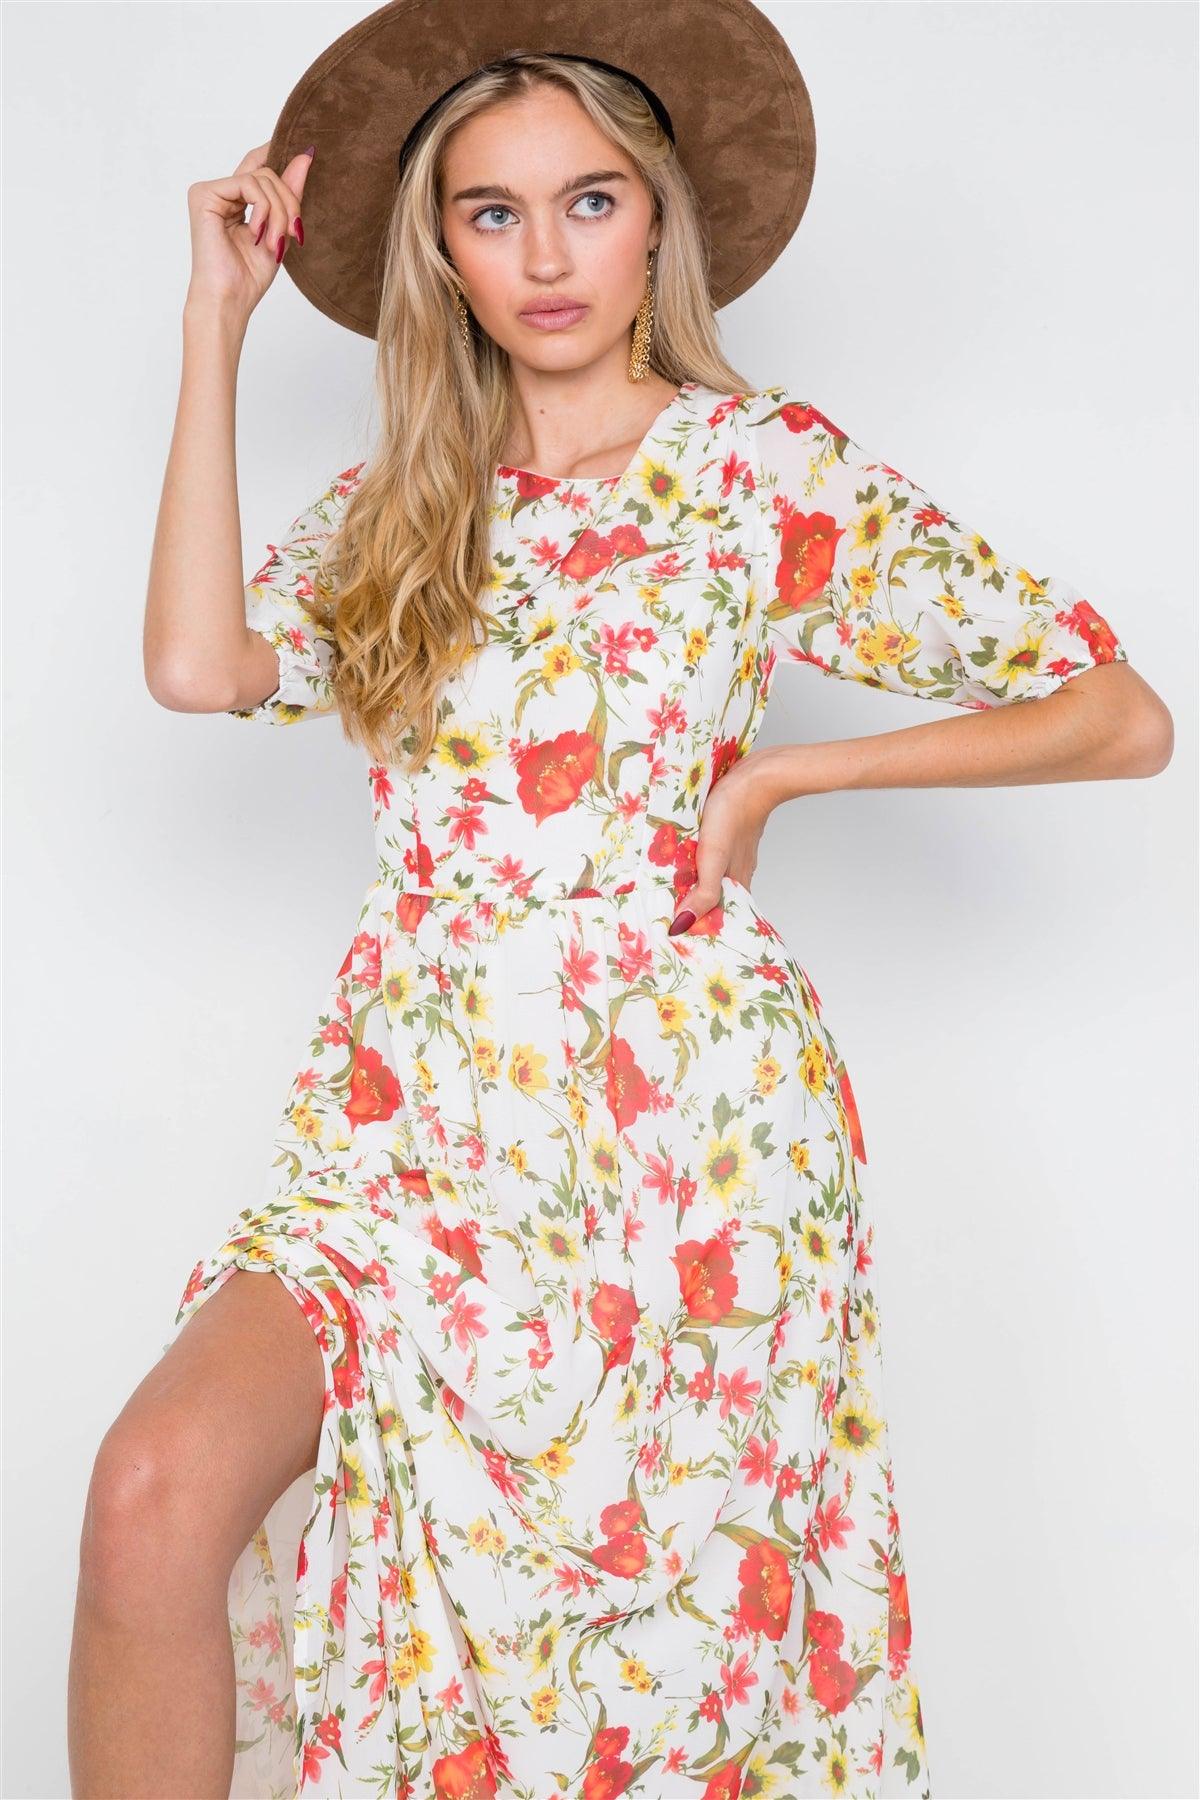 Beige Chic Semi-Sheer Floral Print Maxi Dress  /2-2-2